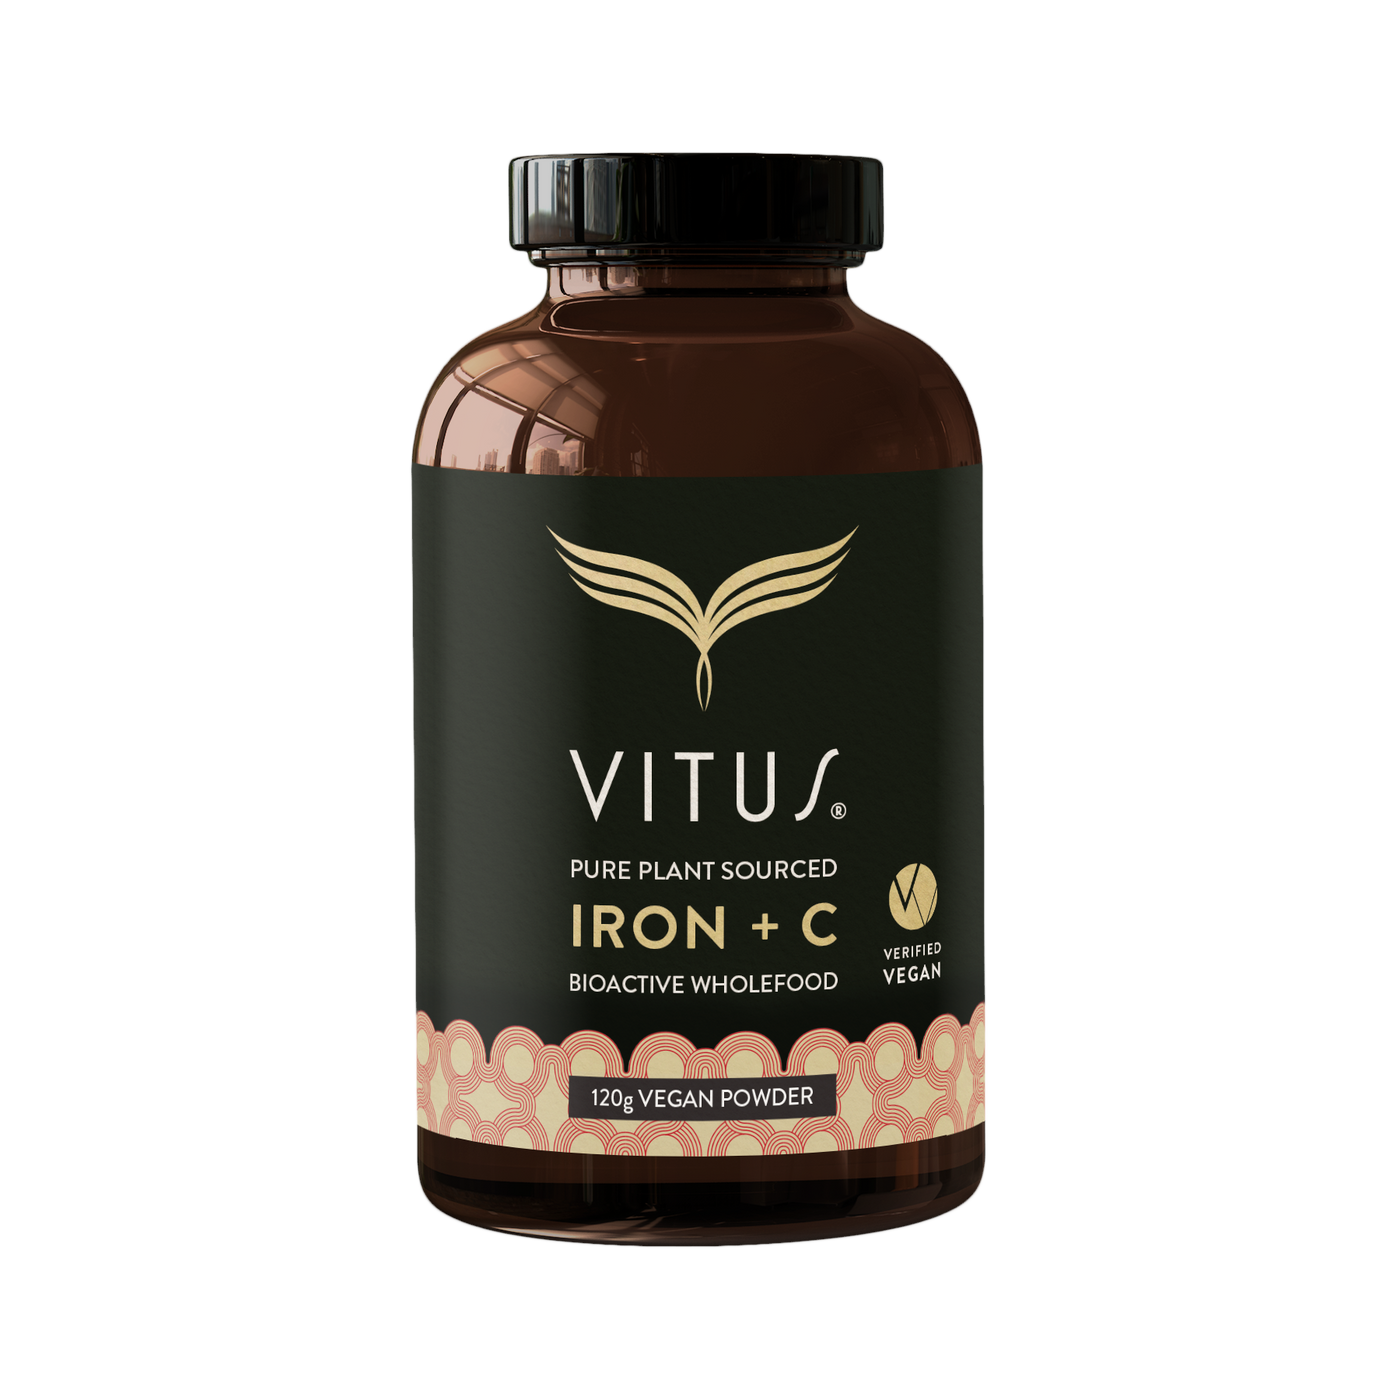 VITUS Iron + C 120g Vegan Powder